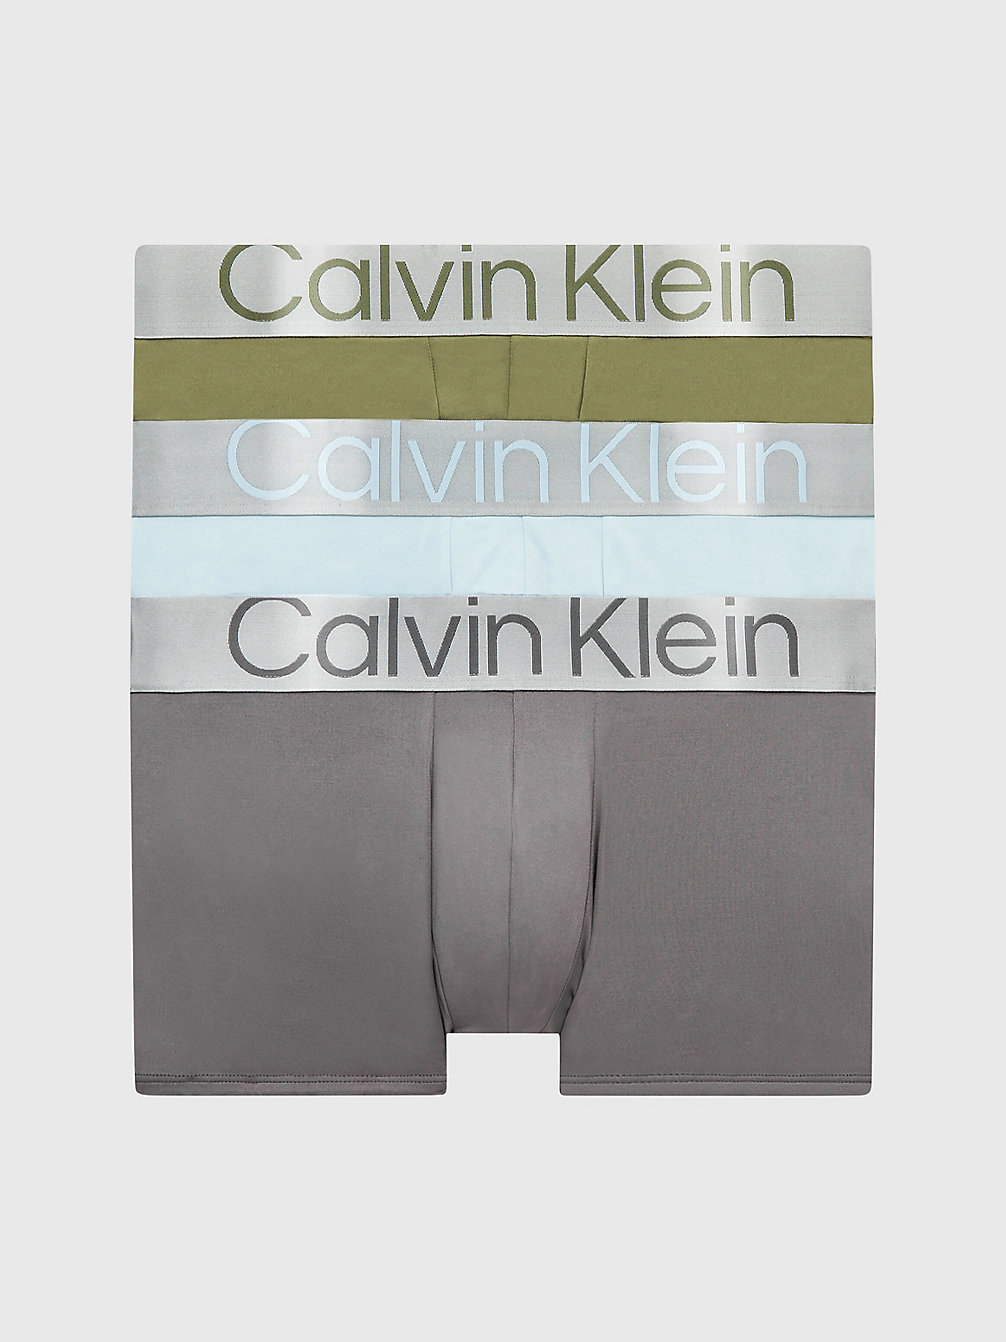 NAPA/ PALEST BLUE/ GREY SKY Lot De 3 Boxers Taille Basse - Steel Micro undefined hommes Calvin Klein